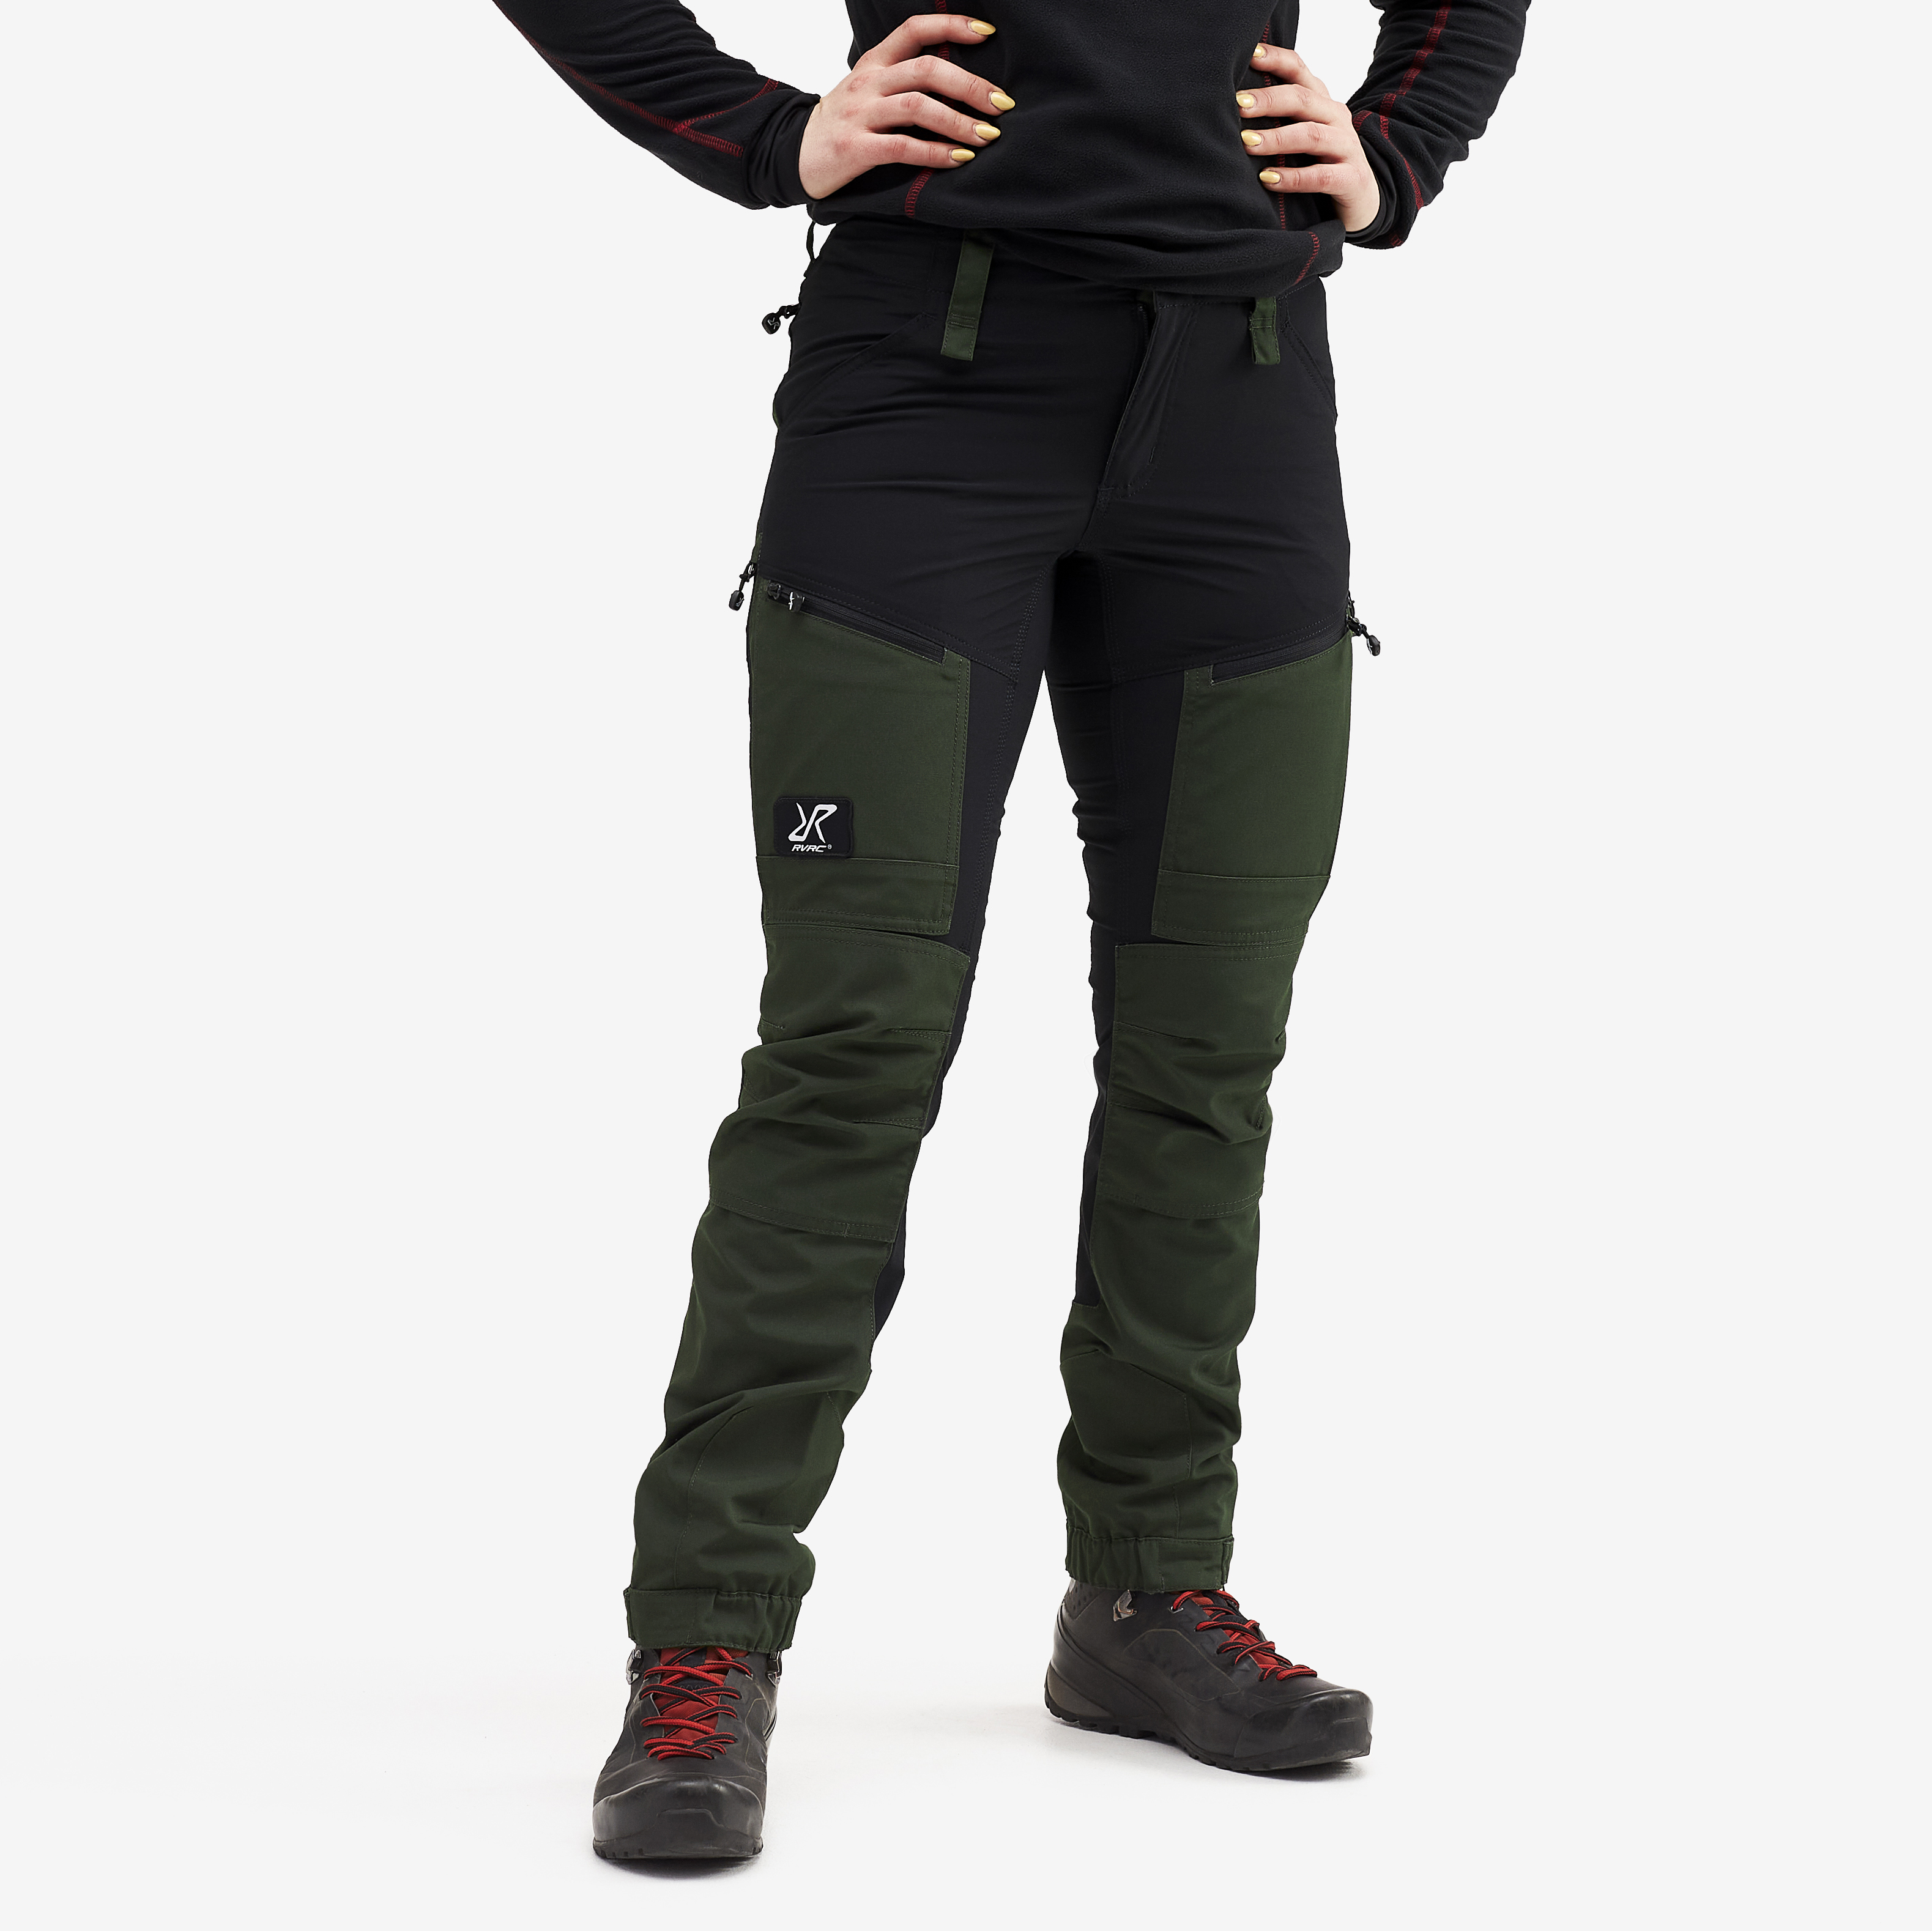 RVRC GP Pro Short hiking pants for women in green